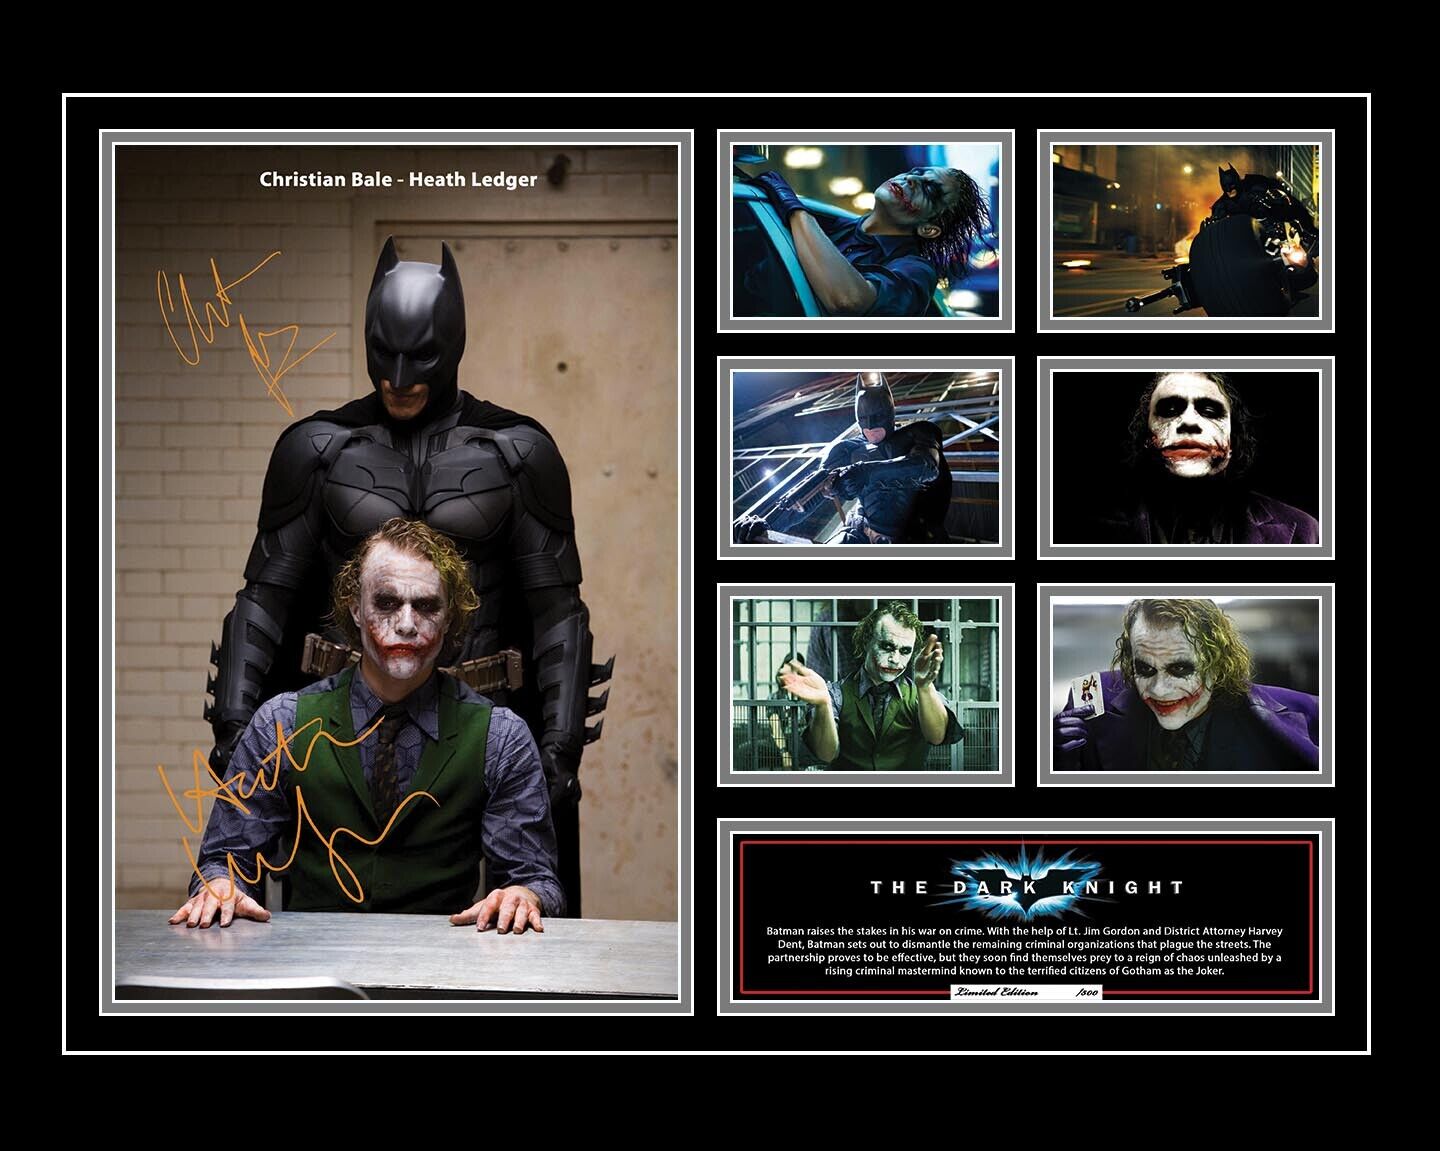 Batman The Dark Knight Heath Ledger Christian bale Signed Limited Photo Memorabilia Frame - Homeware Discounts